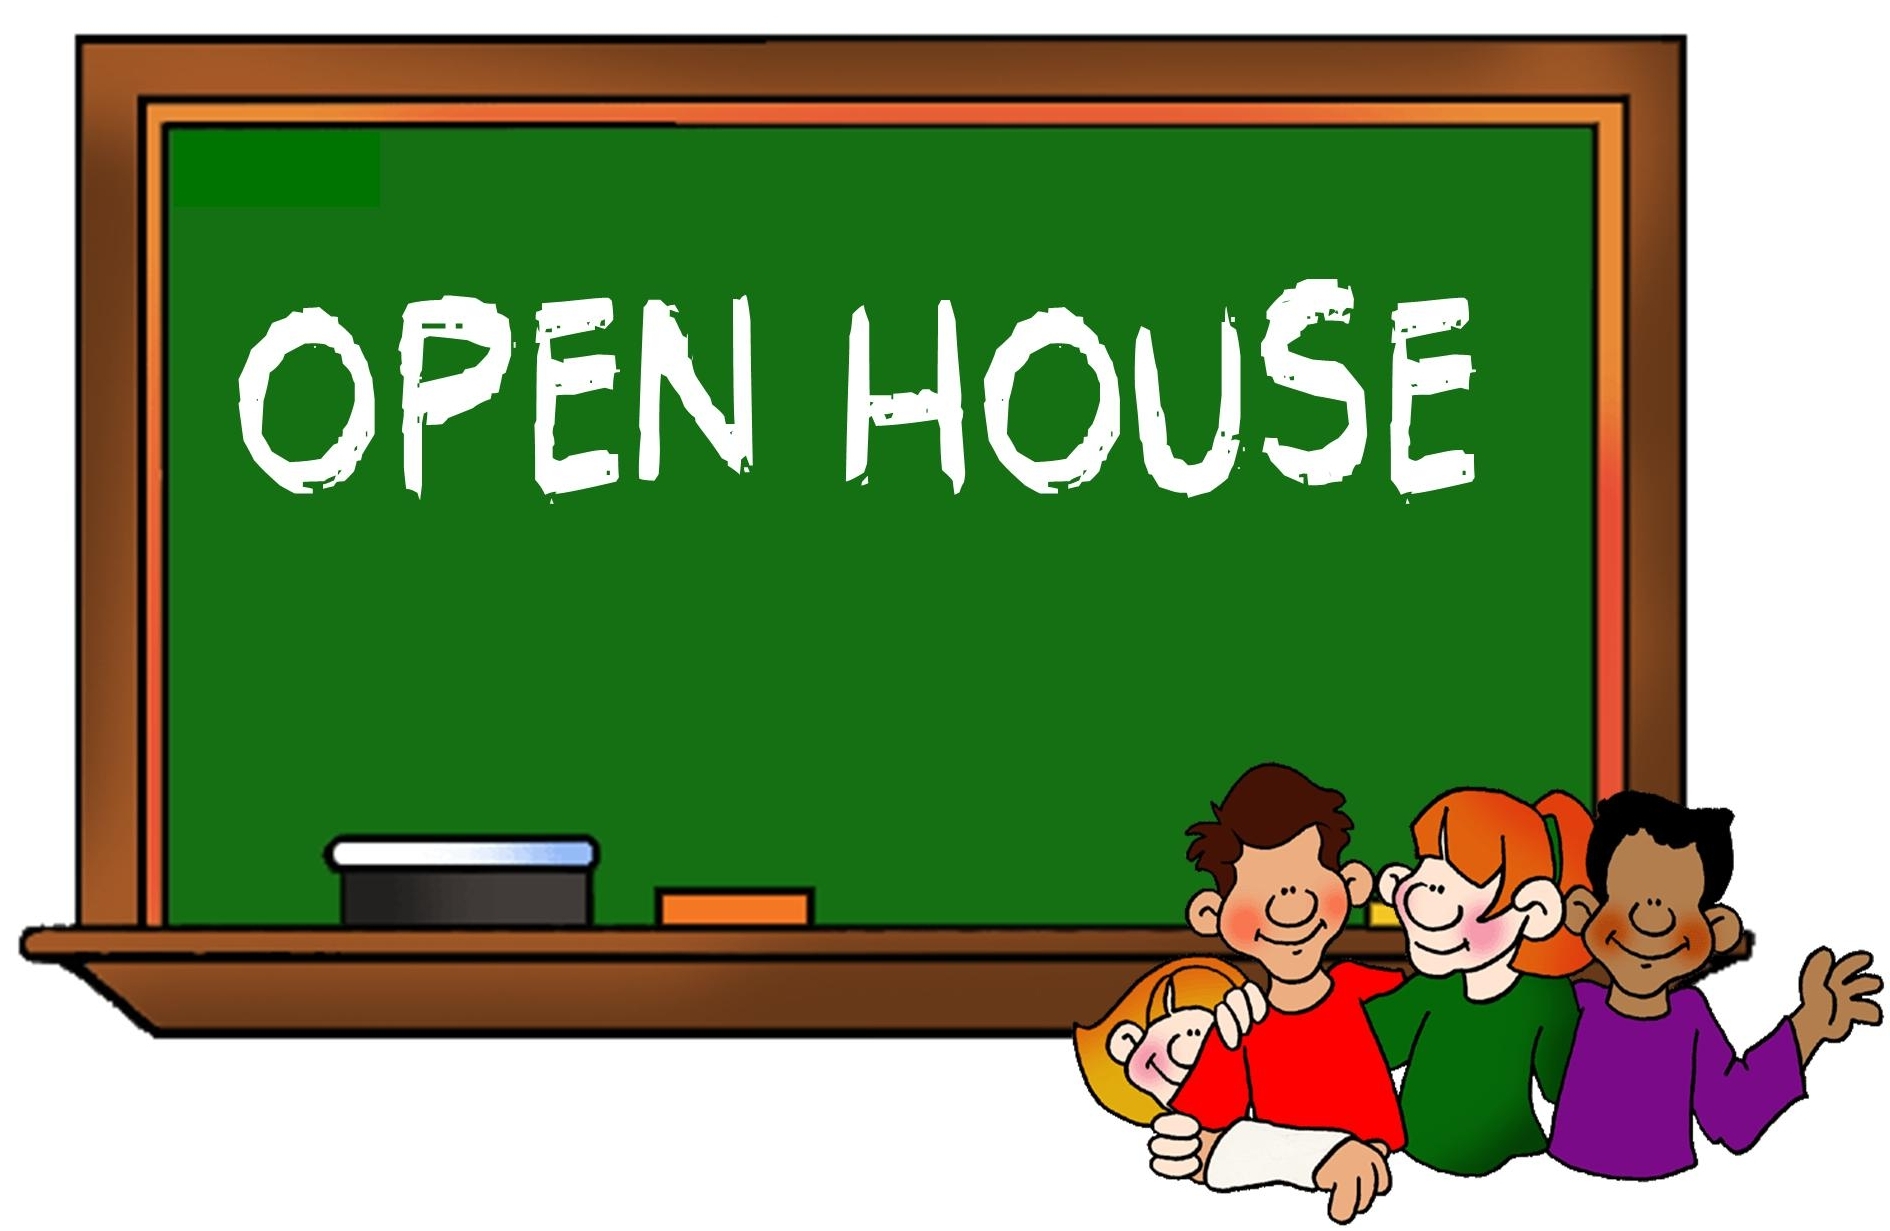 School Open House - Open House Clipart